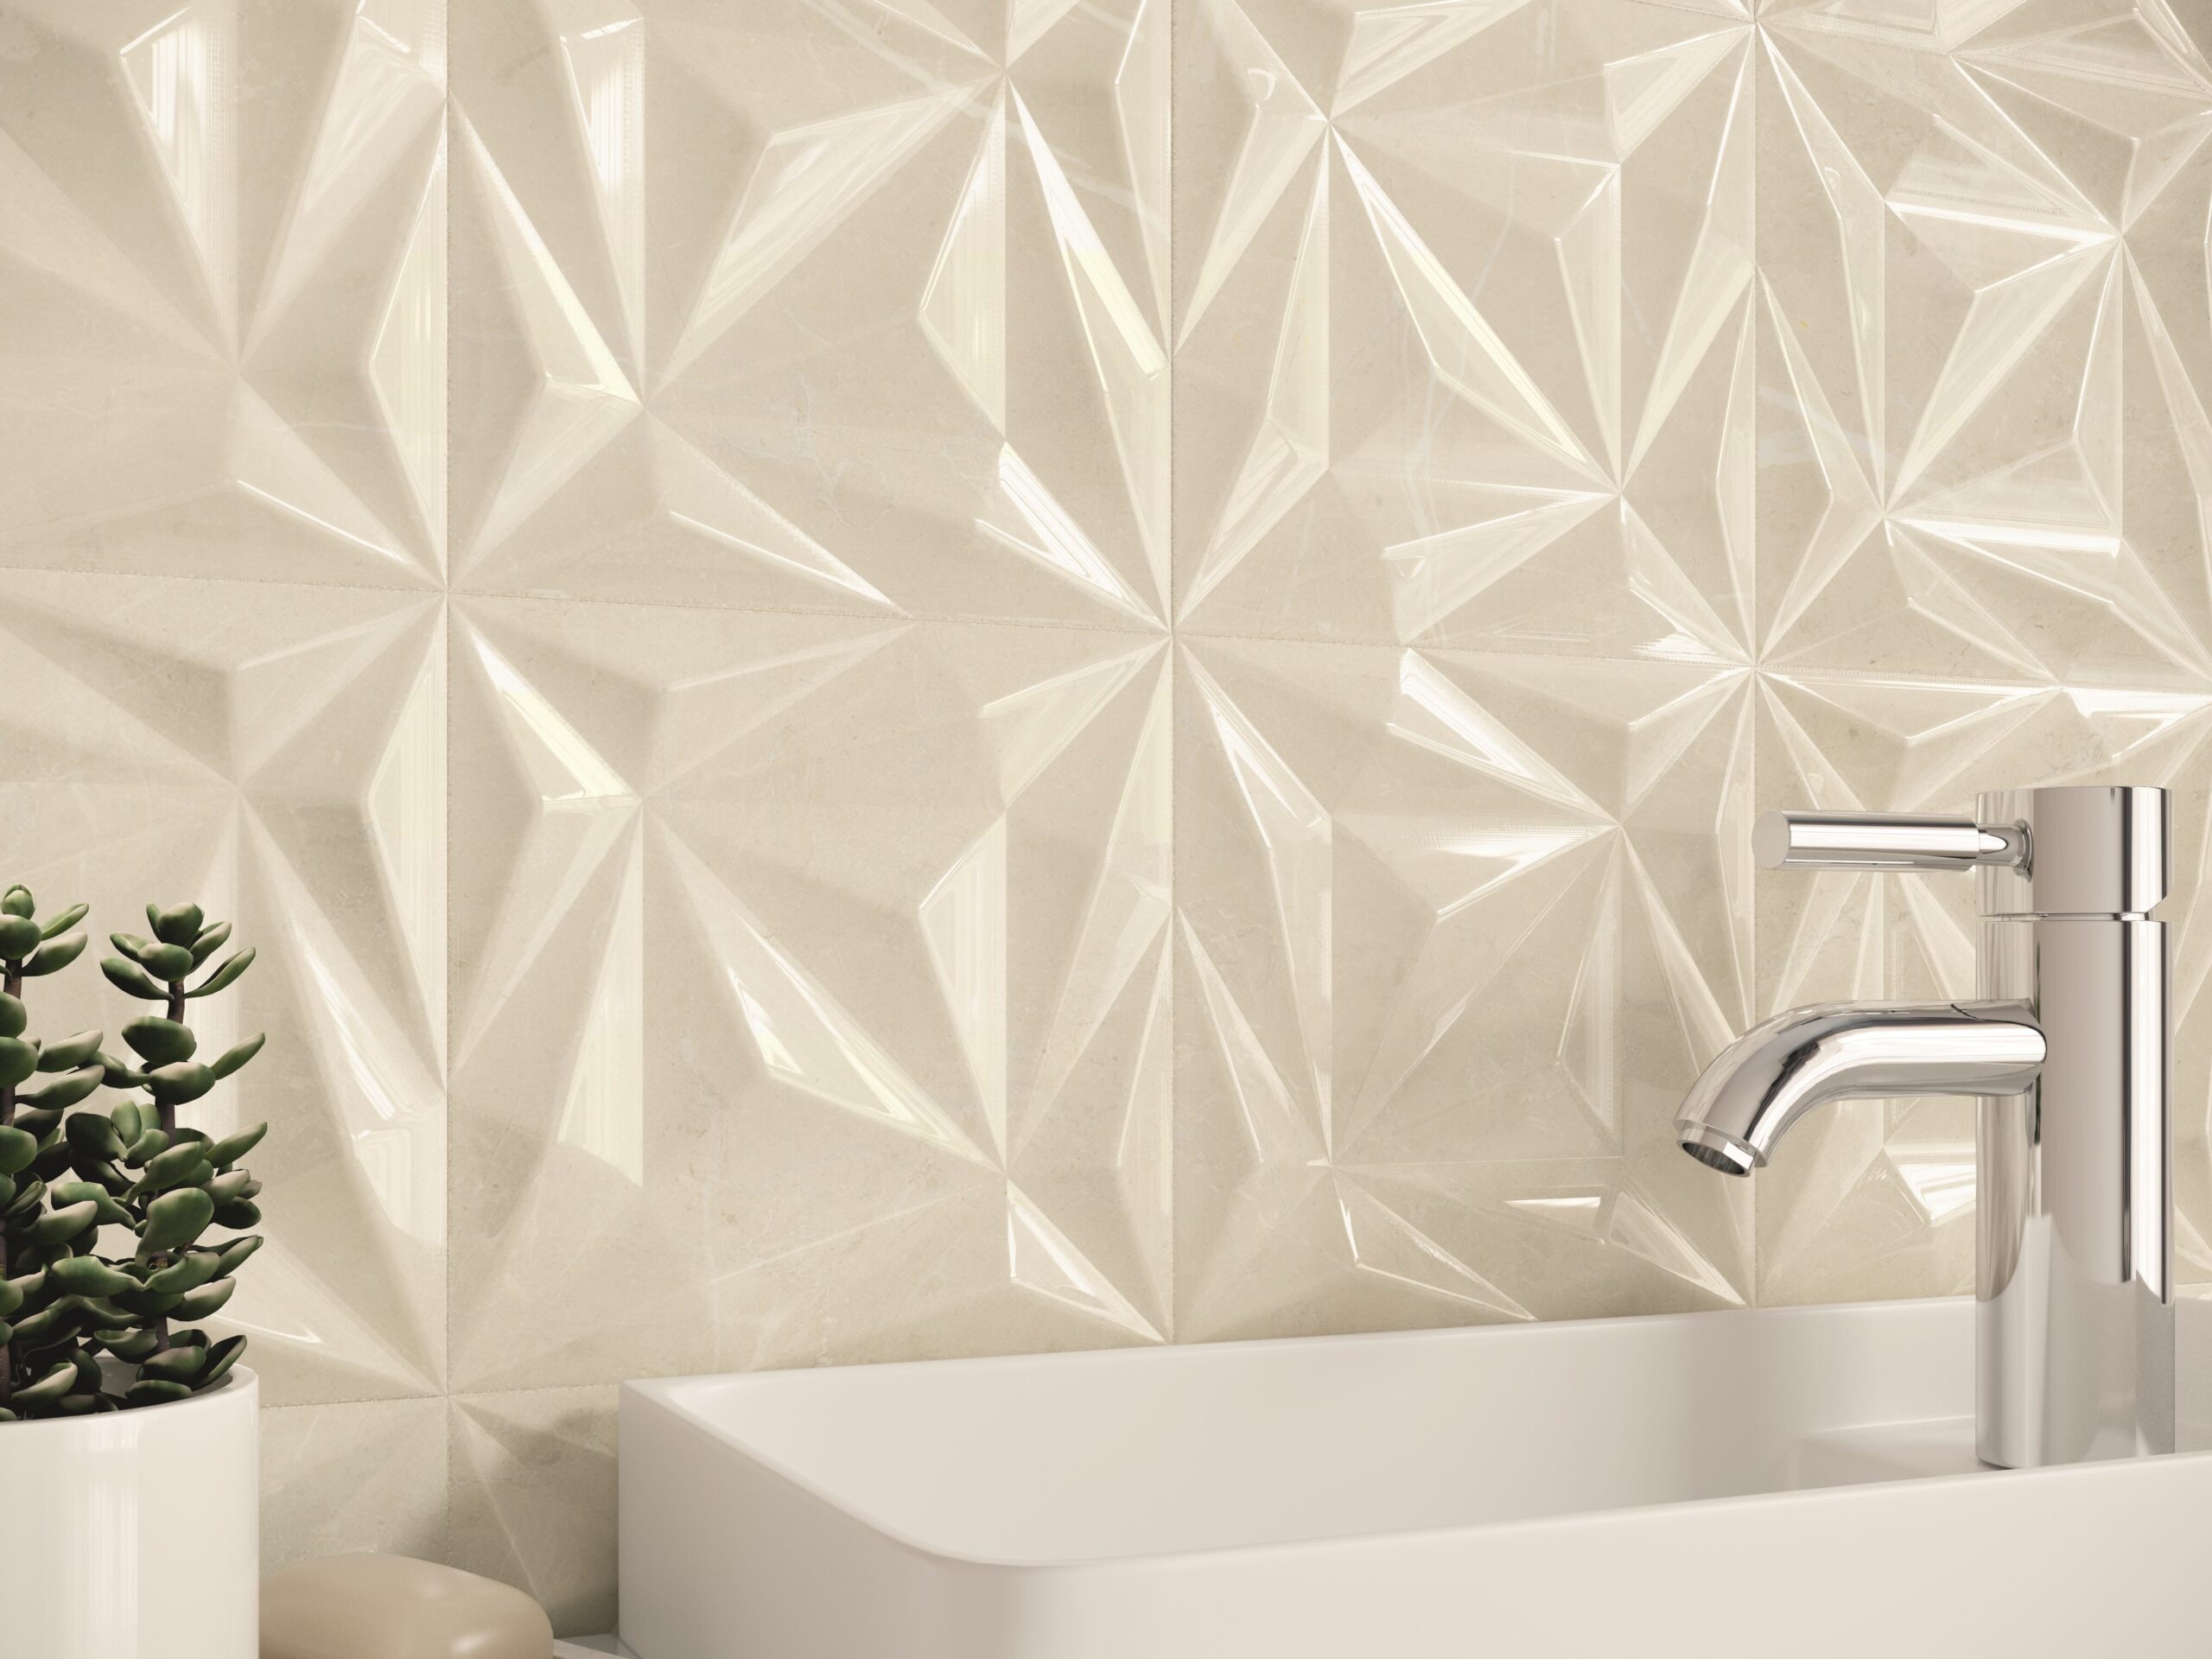 Bathroom Tiles The Best Marble, Bathroom Tile Designs Around Bathtub